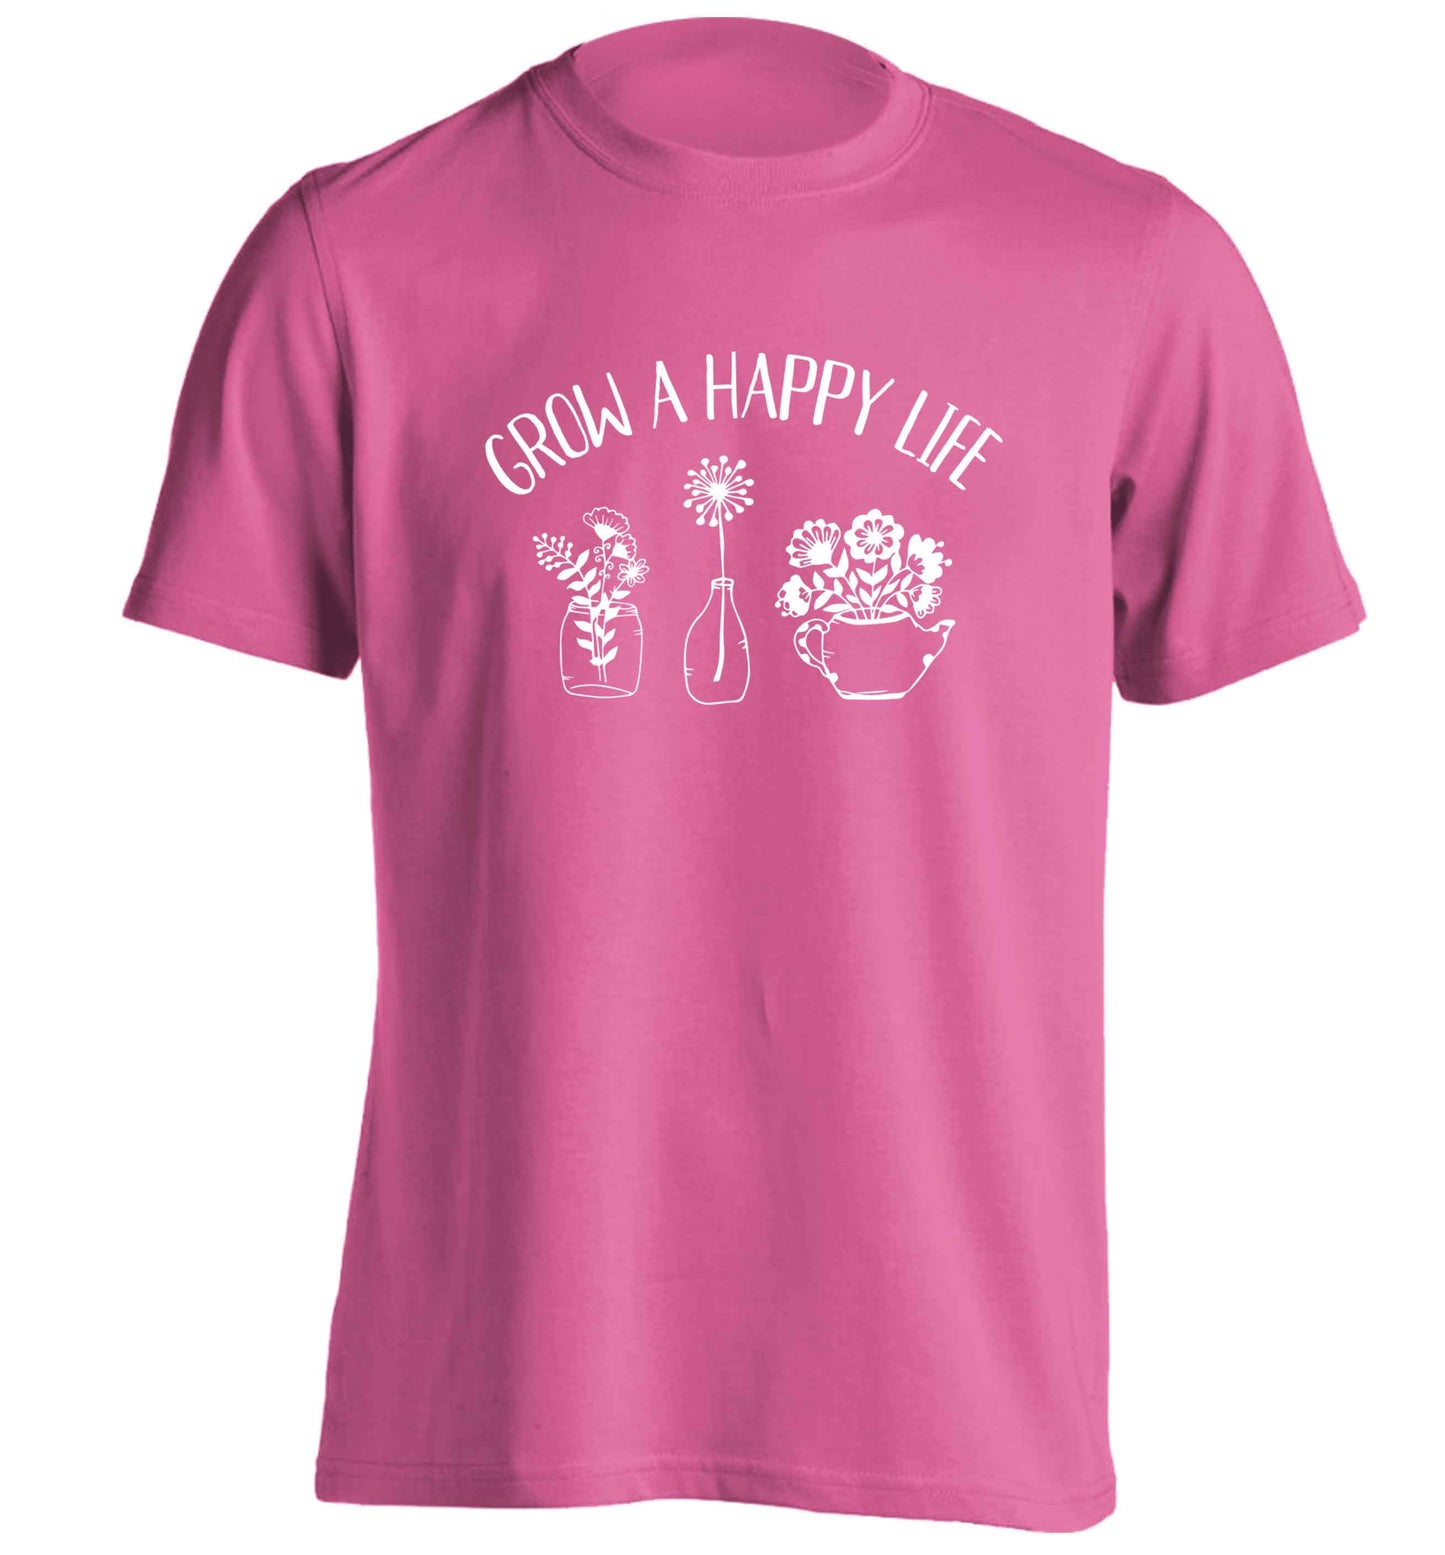 Grow a happy life adults unisex pink Tshirt 2XL